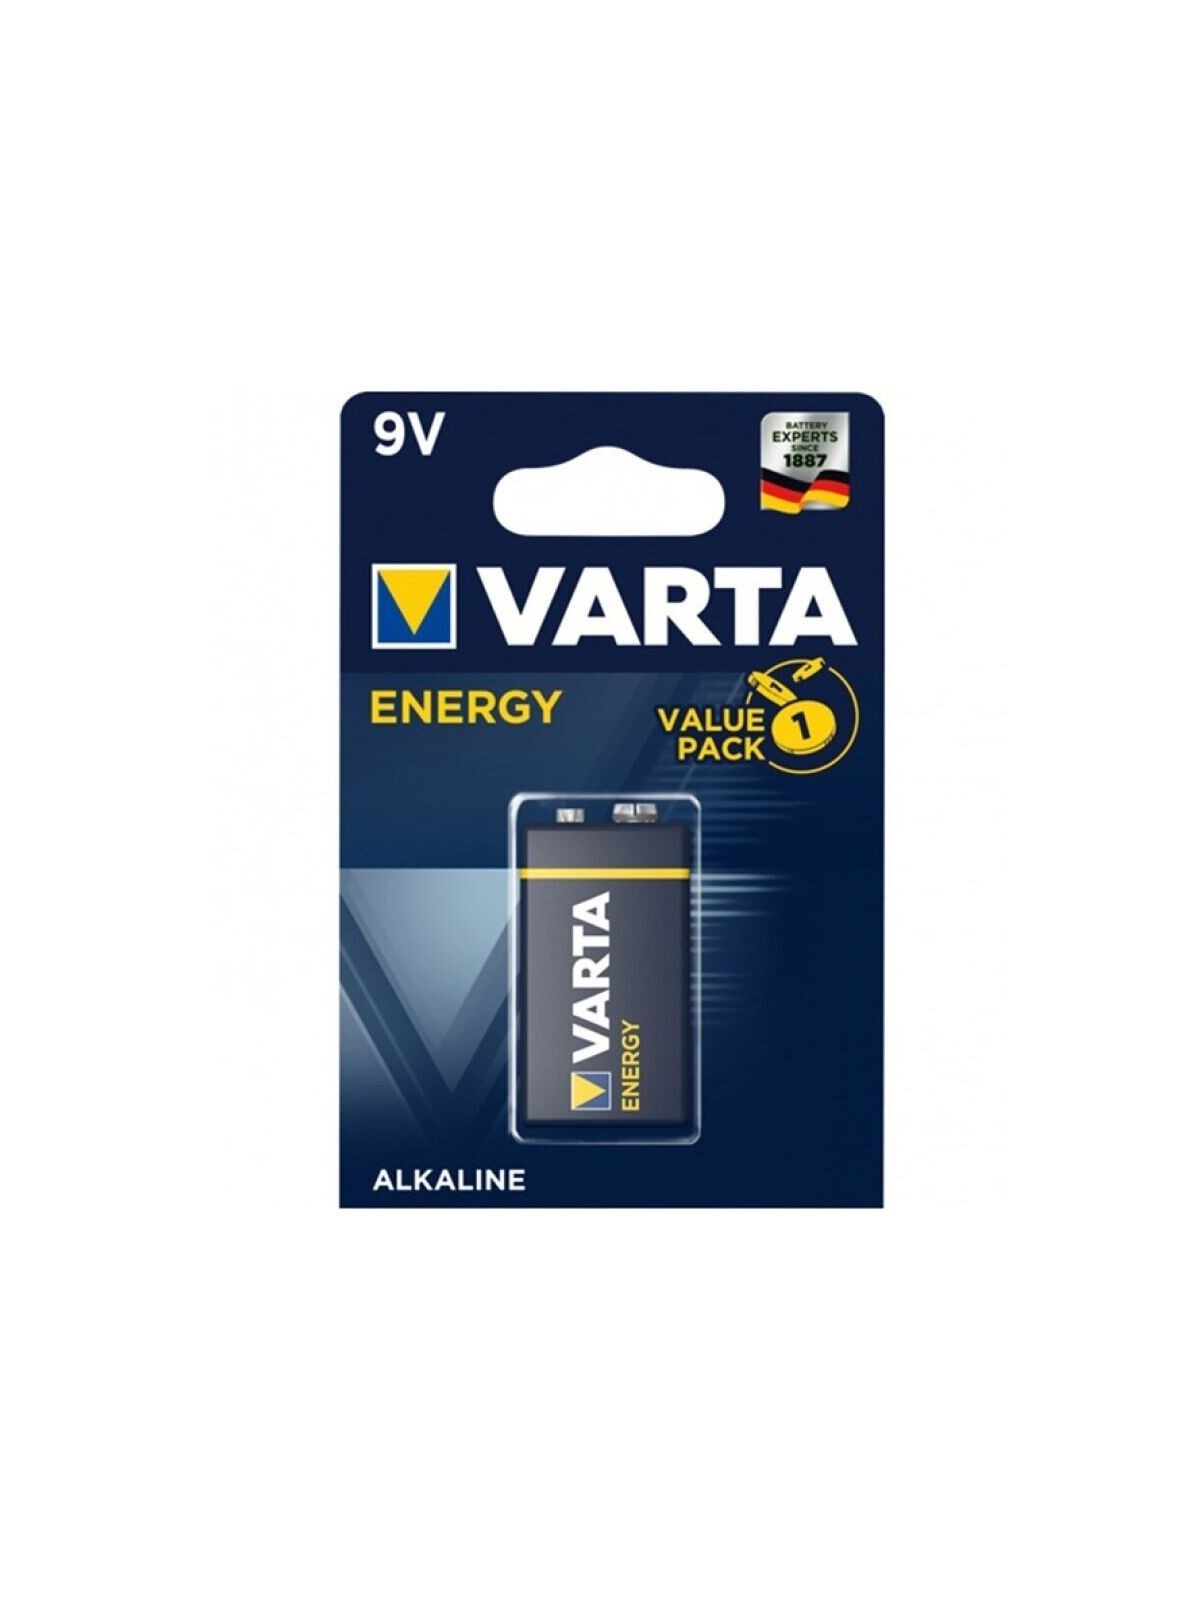 Varta Energy Pila Alcalina 9V Lr61 Blister*1 - Comprar Pilas y baterías Varta - Pilas & baterías (1)